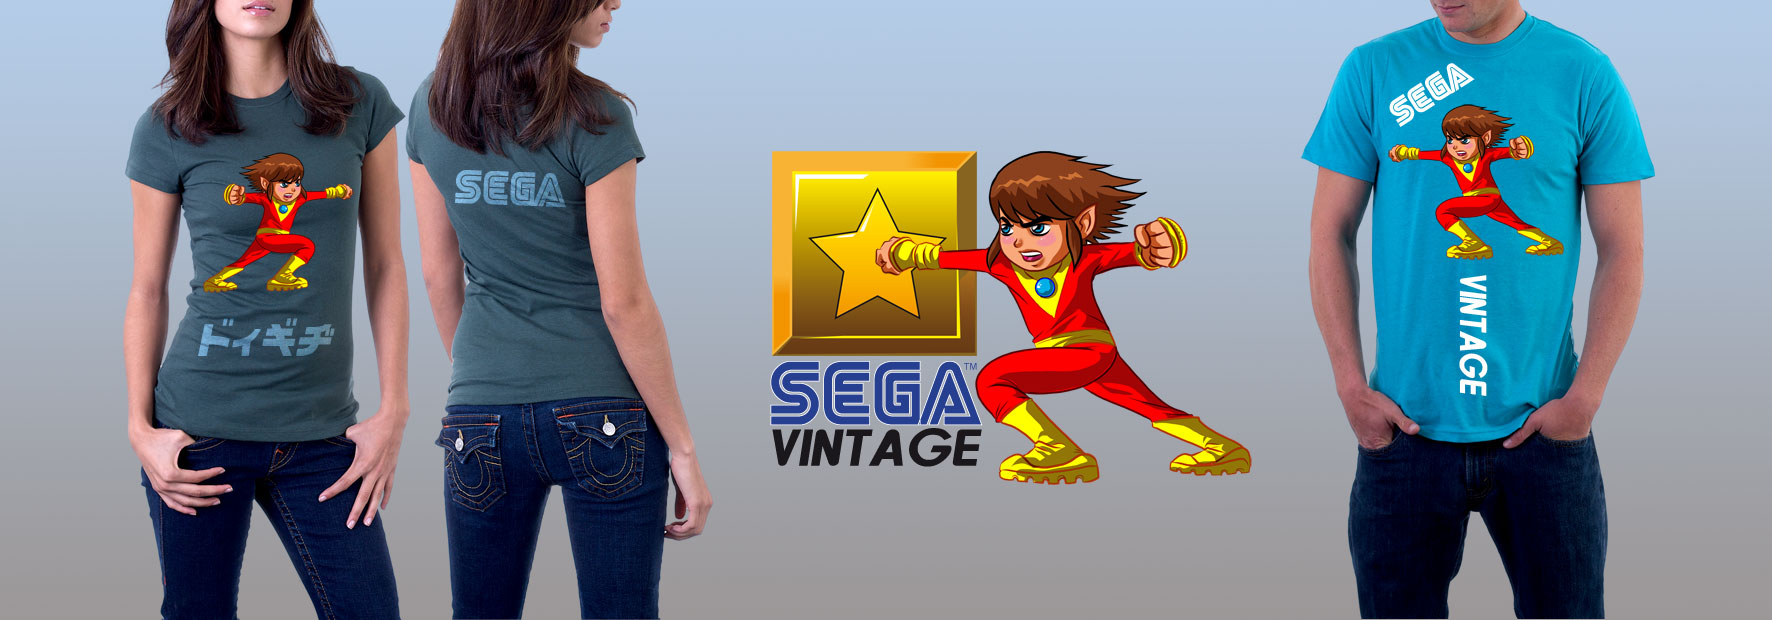 Sega Vintage : New Alex Kidd t-shirt